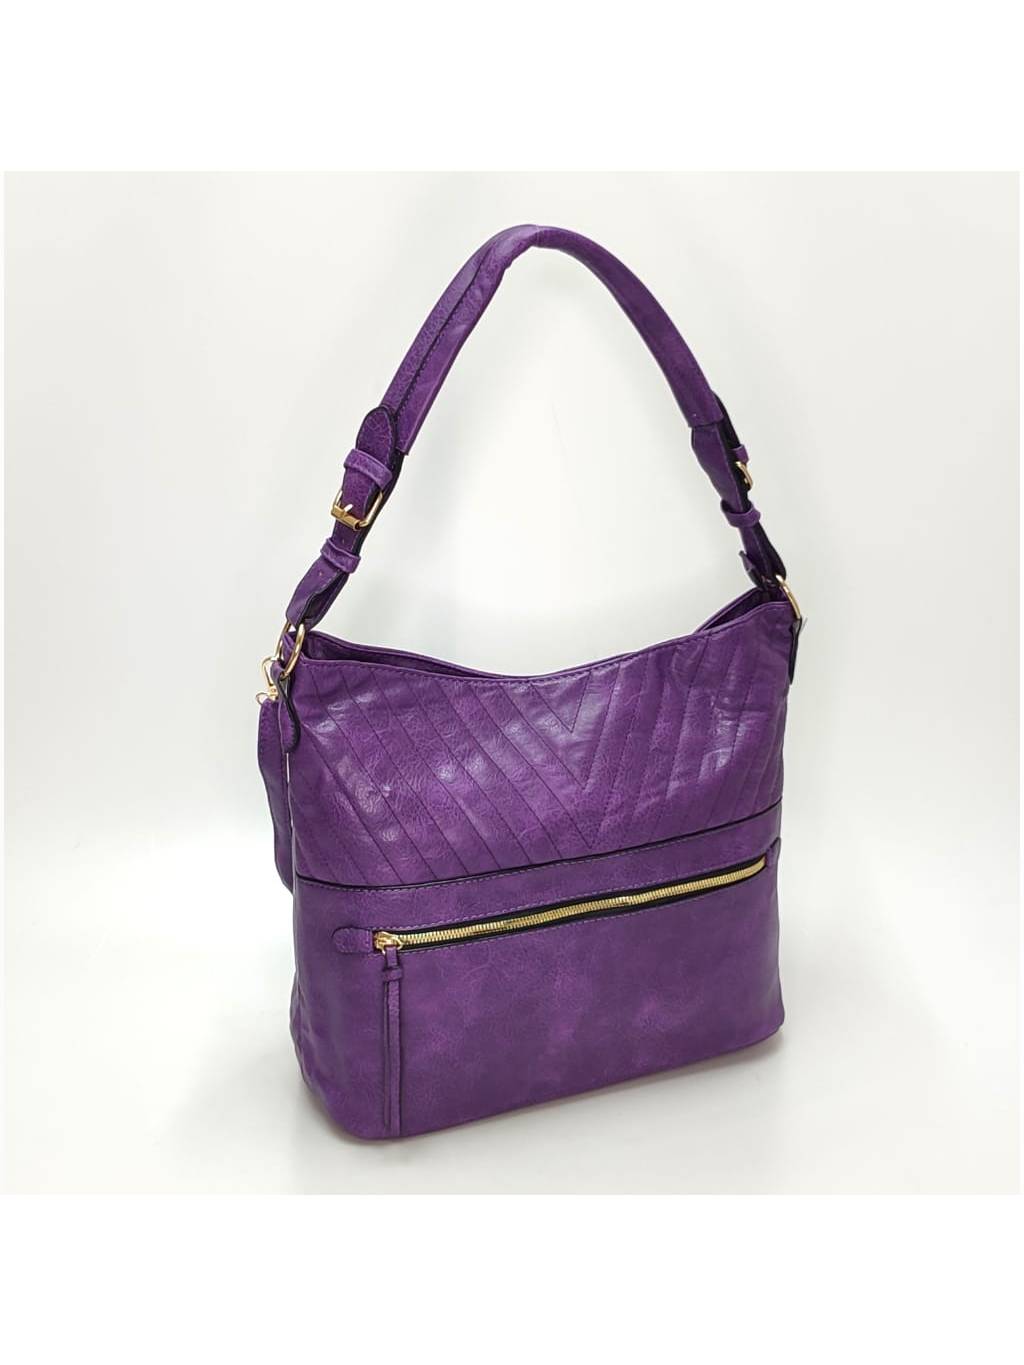 Dámska kabelka H3008 fialová www.kabelky vypredaj (20)